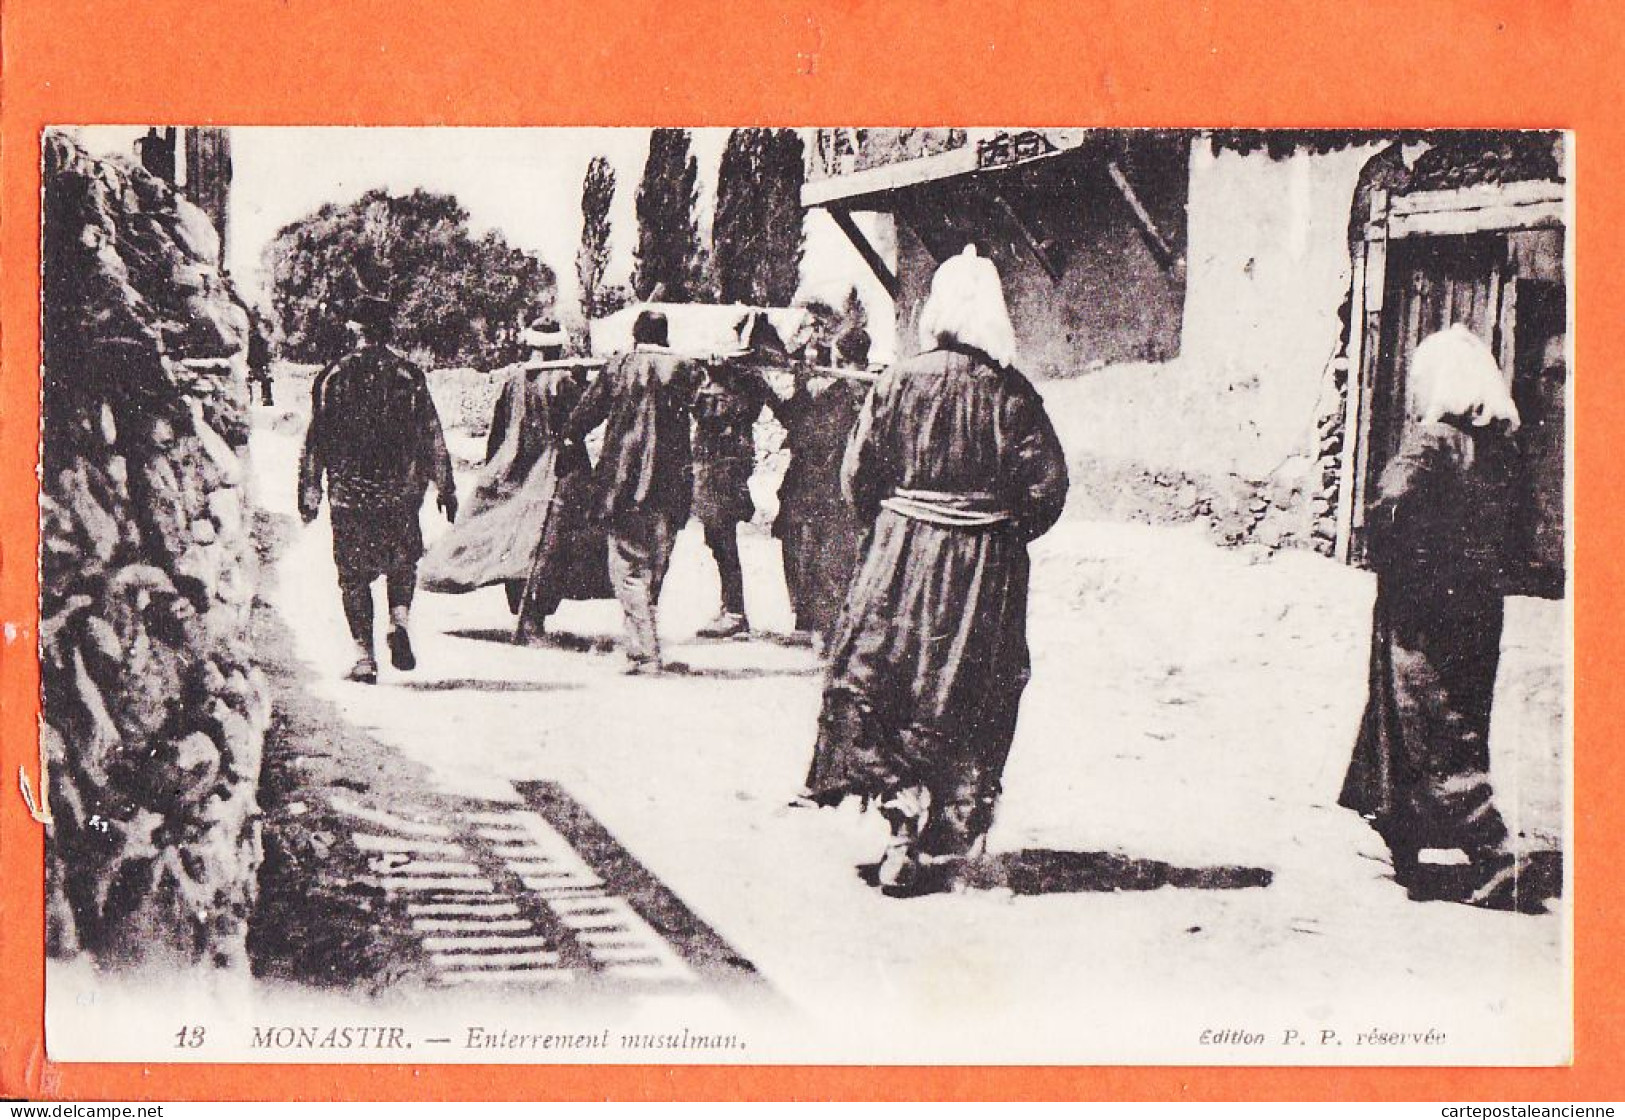 06477 / MONASTIR Macédoine Bitola Битола Μοναστήρι Enterrement Musulman 1915s Edition LEVY P.P 13 - Macédoine Du Nord